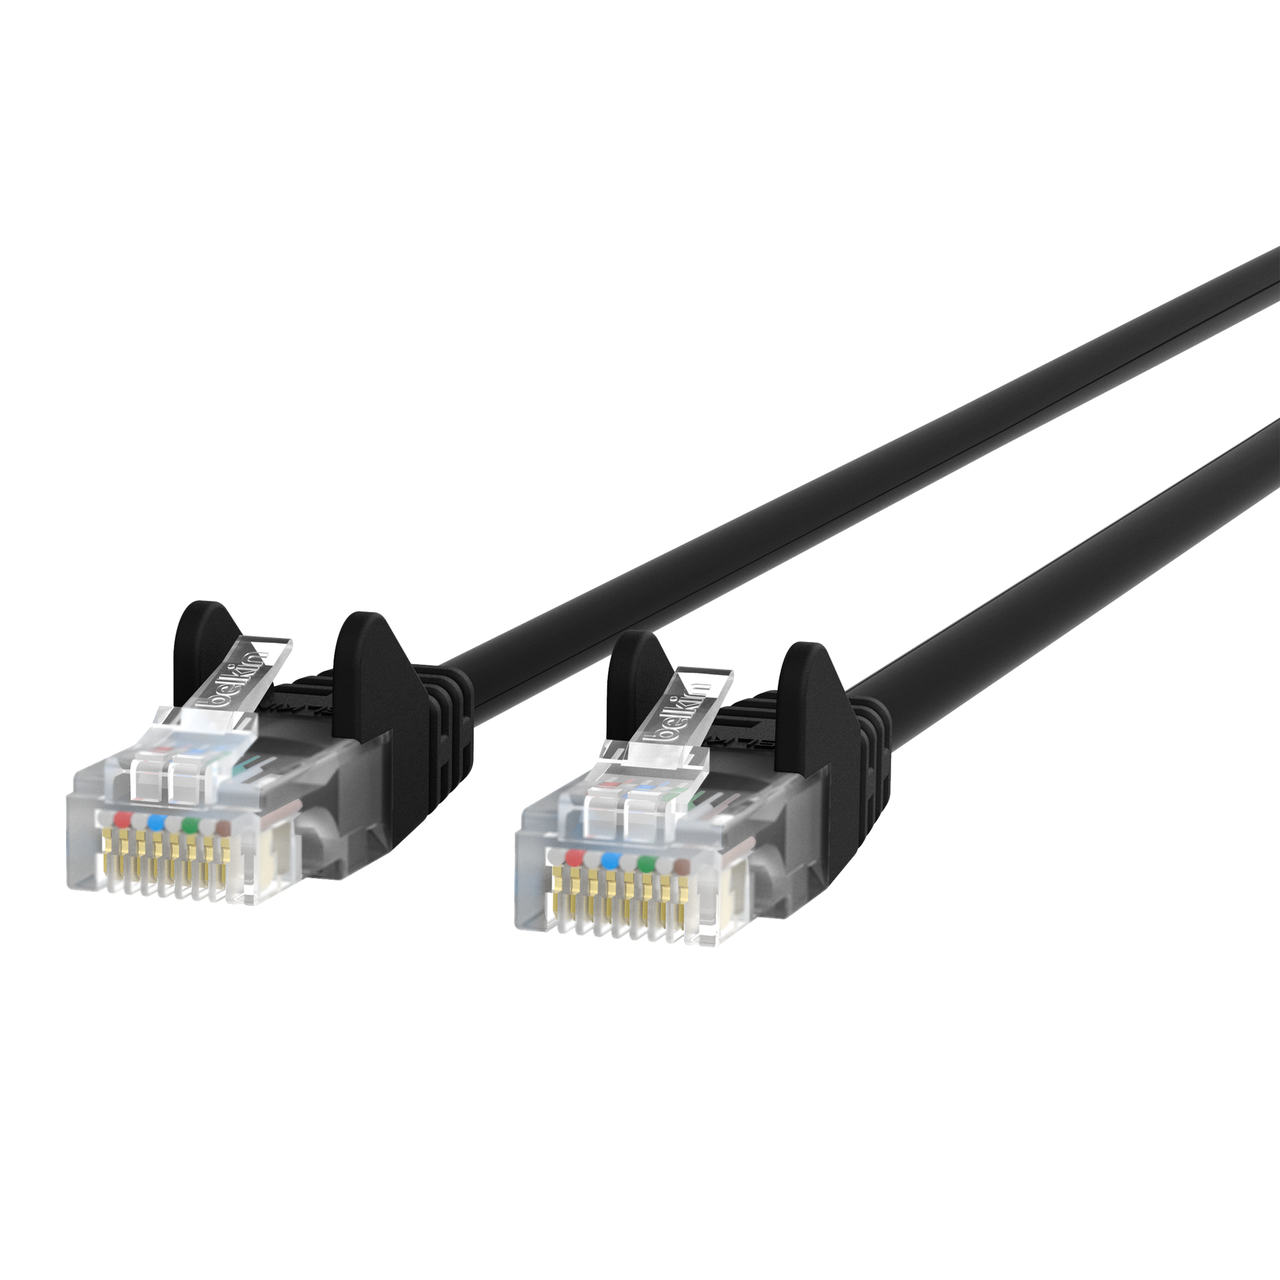 Belkin ORB Network Cat5e UTP 10/100 RJ45 2M Lan 5M Patch Lead 10M Ethernet Cable Grey 